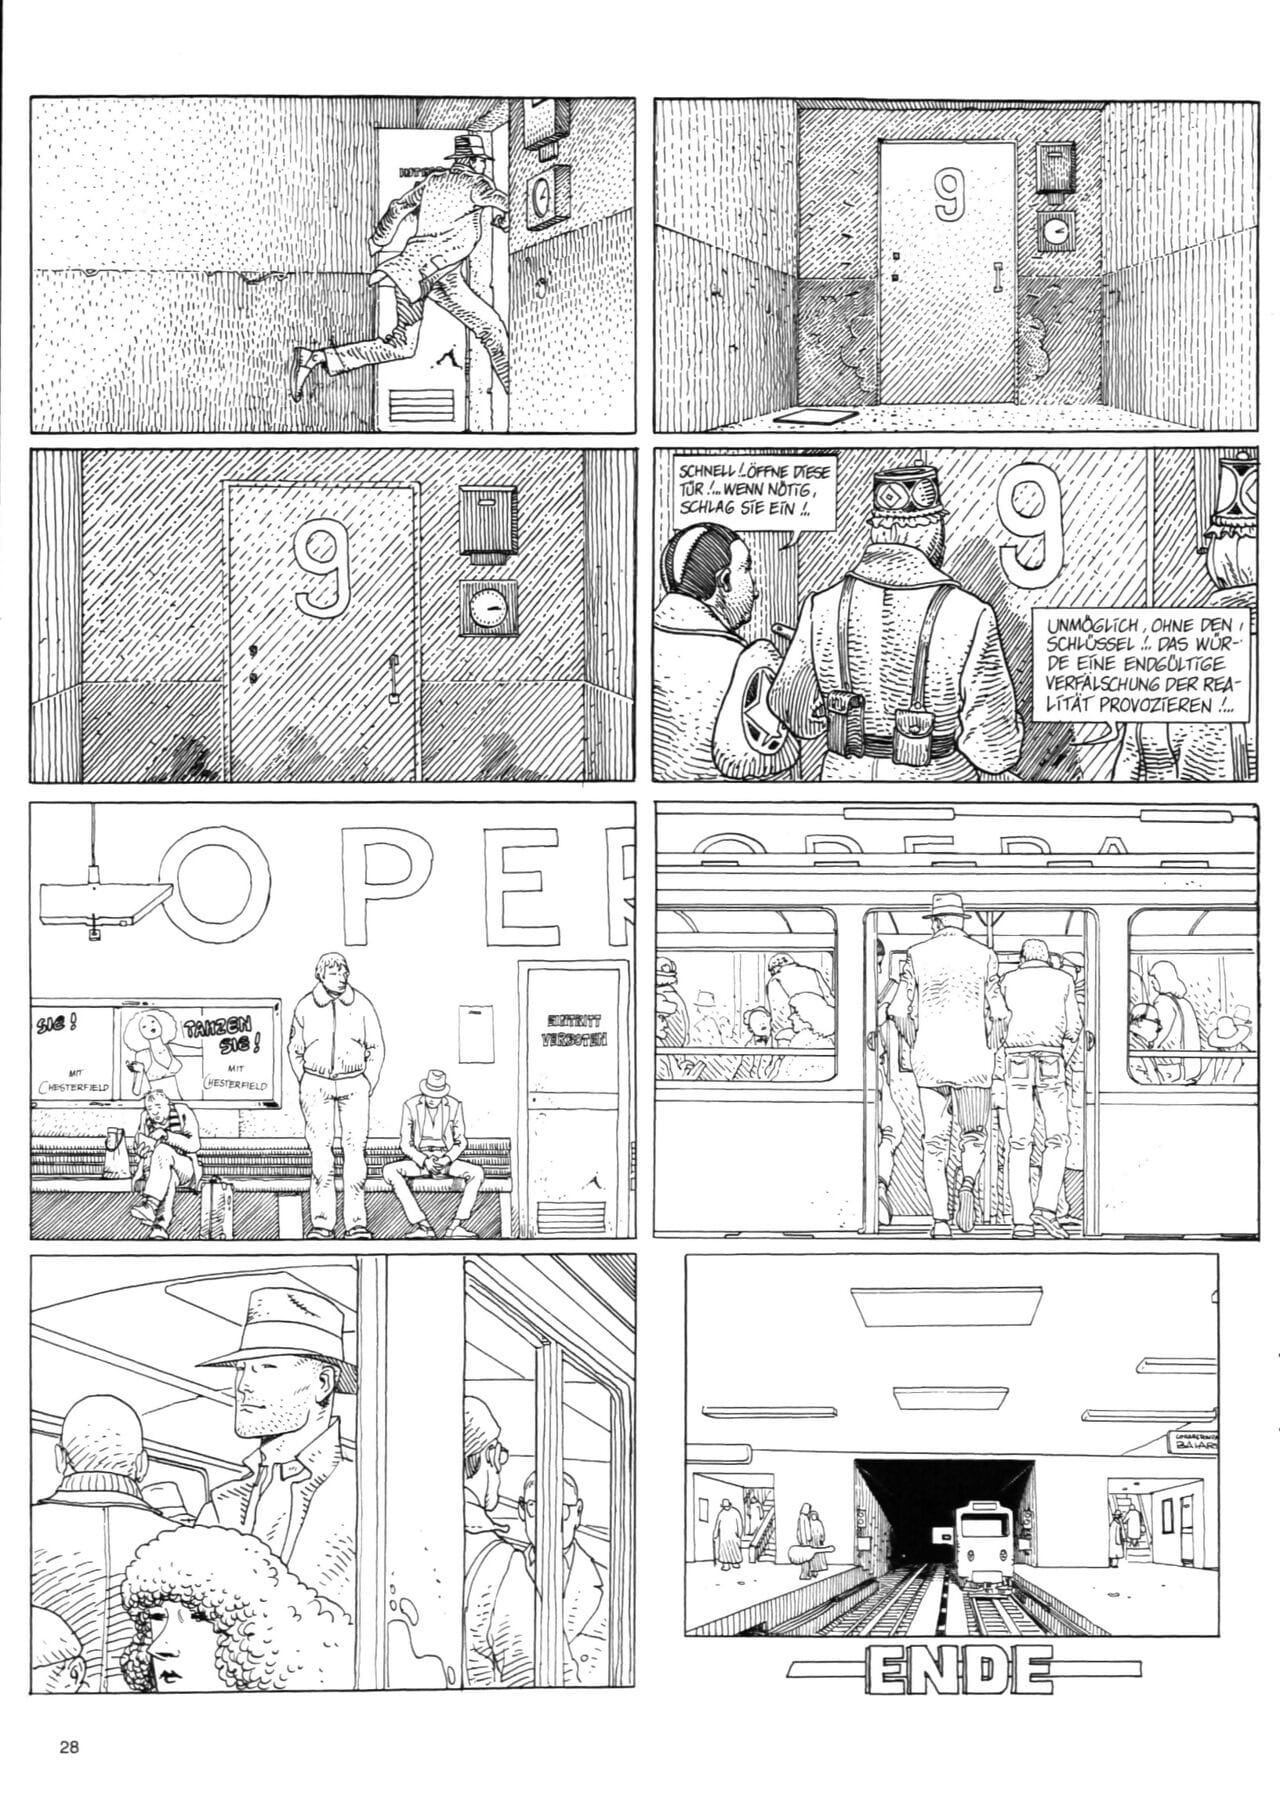 schwermetall #035 parte 2 page 1